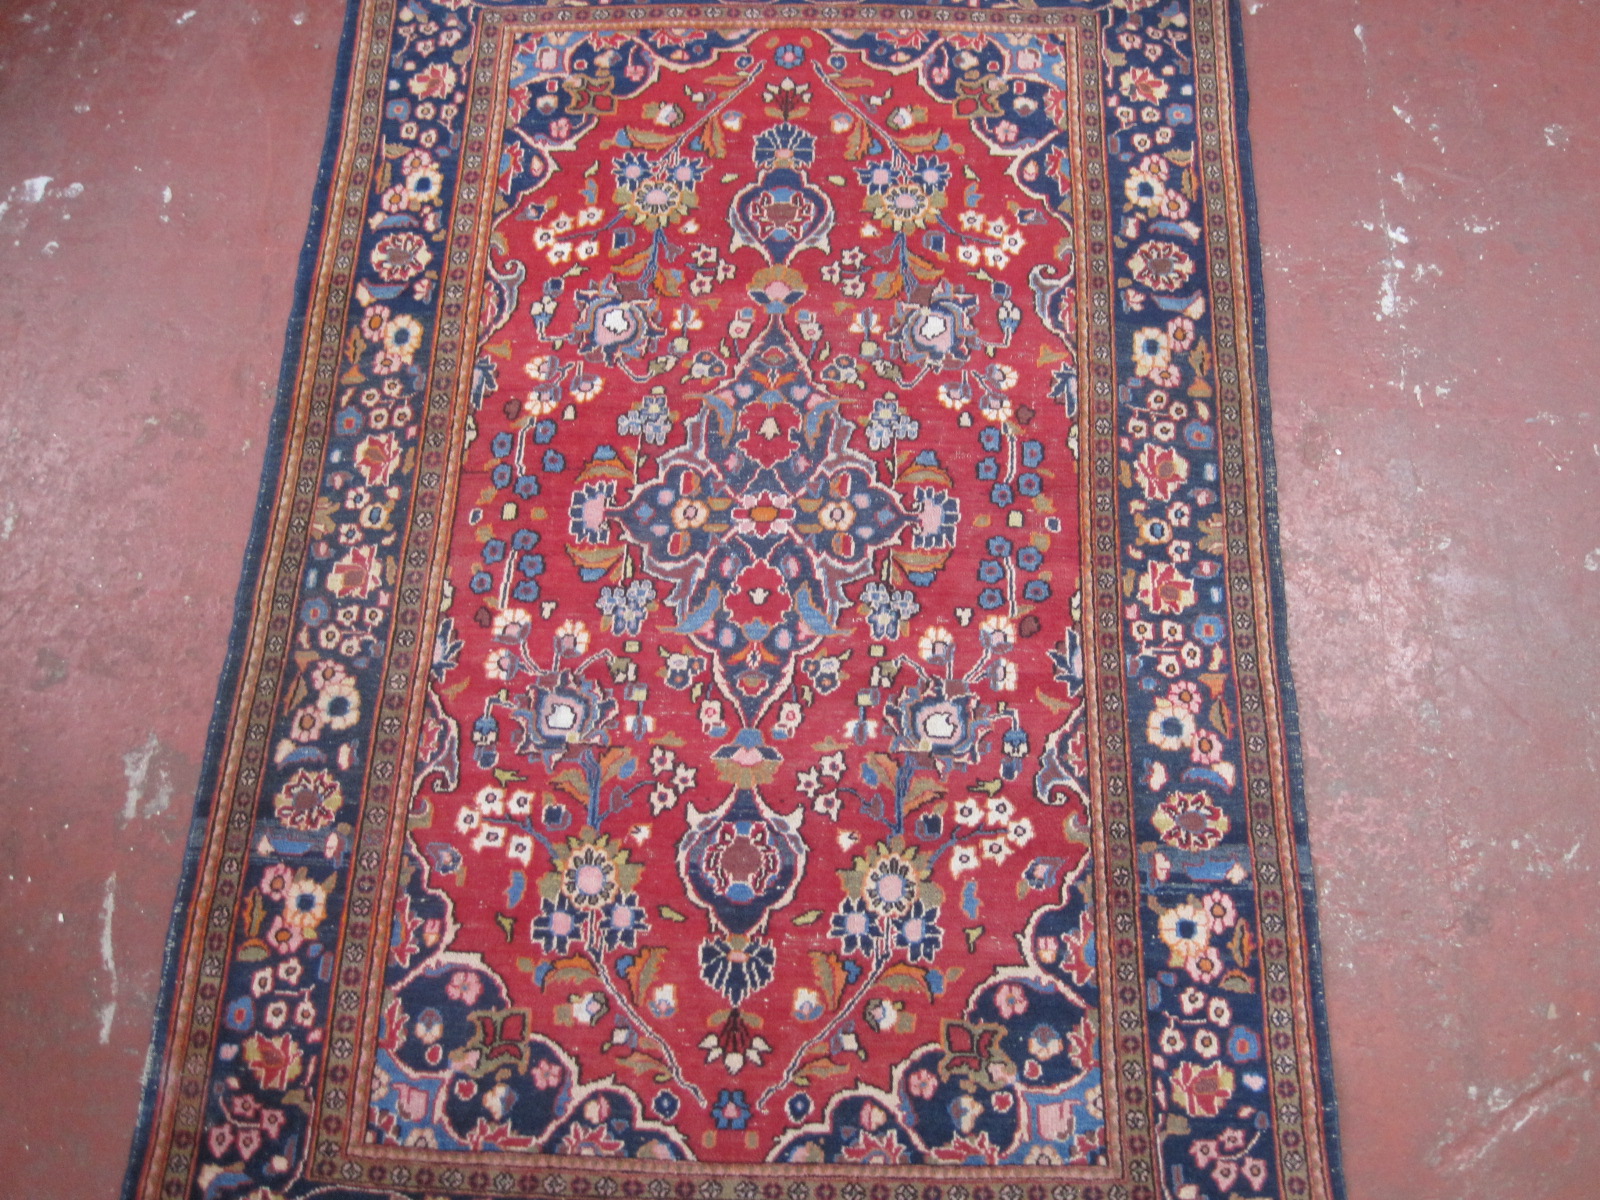 A Persian Kashan rug 203 x 125cm